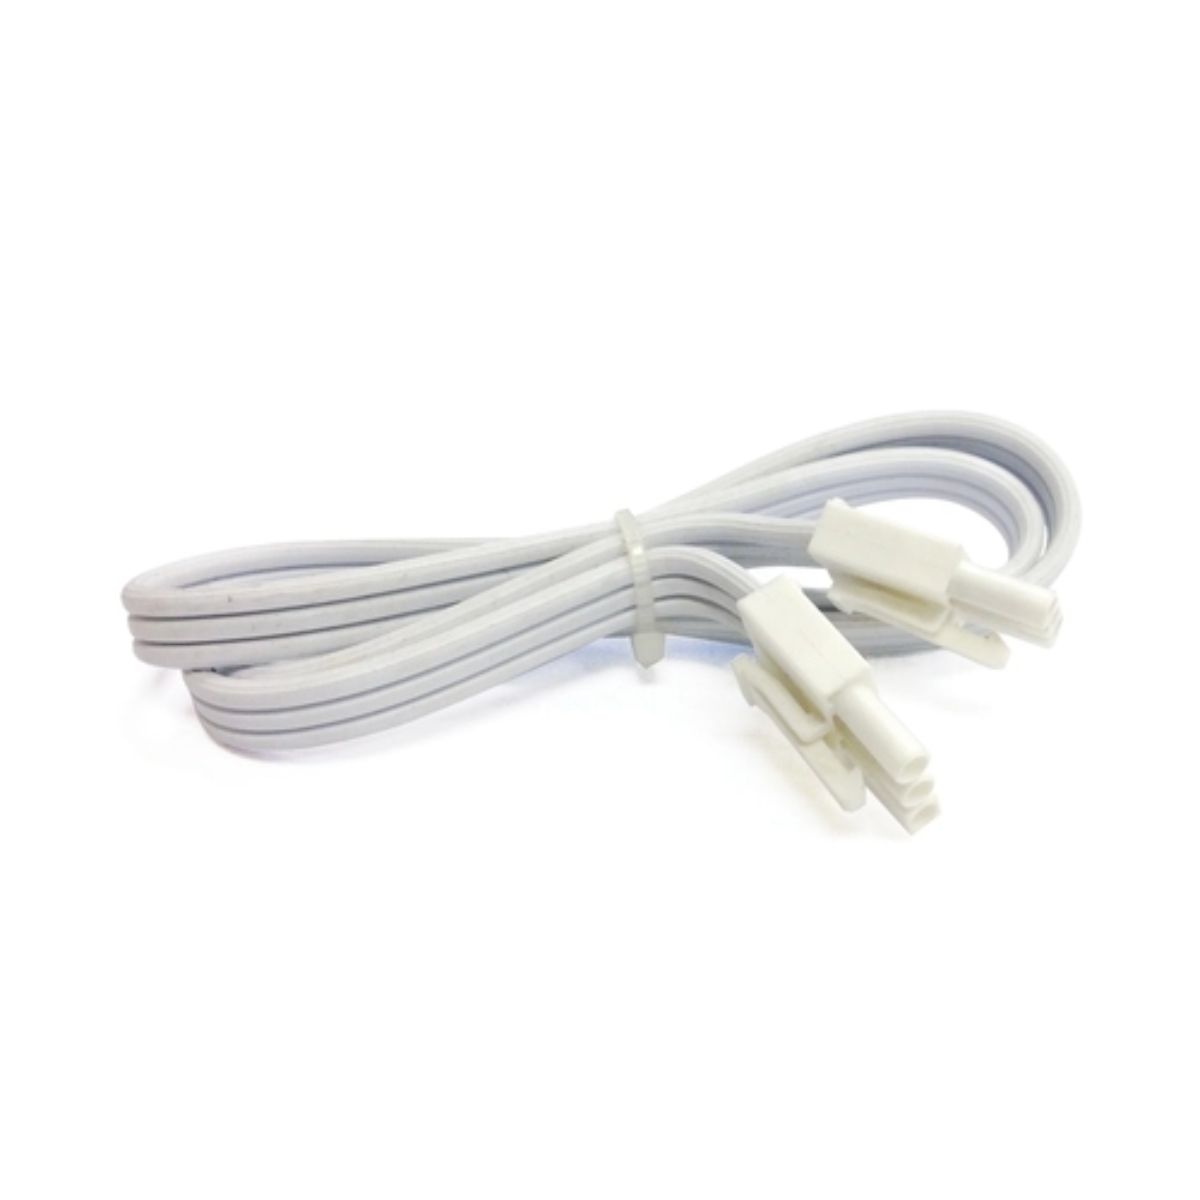 LEDUR 6in. Jumper Cable, White